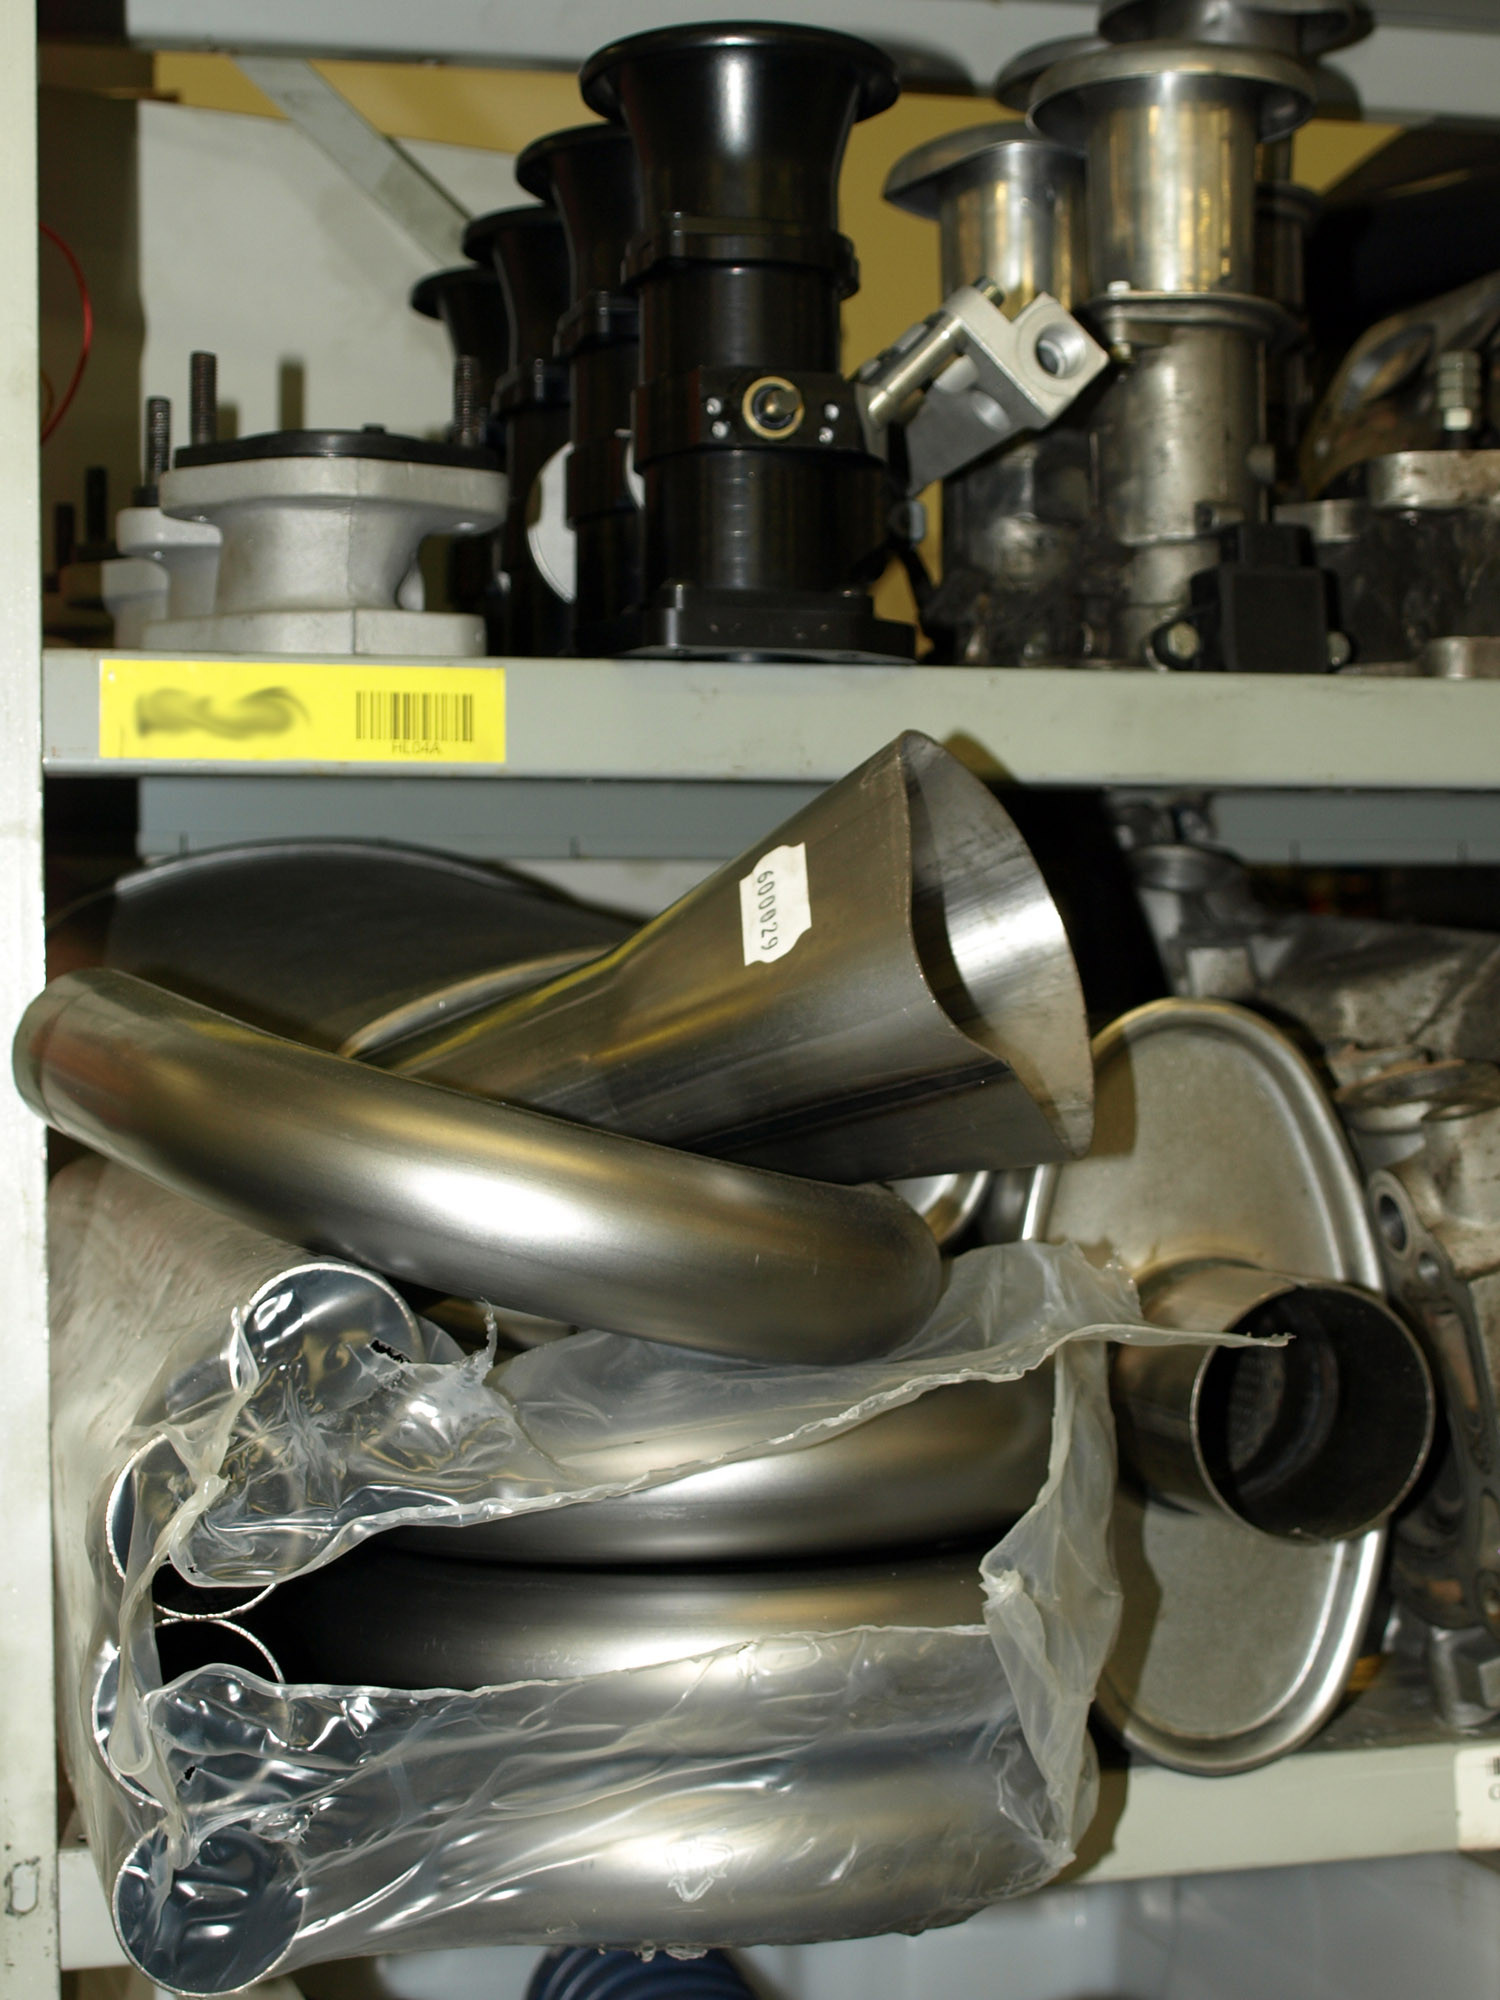 Starletin talvihuolto 2007-2008, HengittÃ¤vyyttÃ¤. Special motorsin lÃ¤ppÃ¤rungot ja Marteliuksen j-putkisarja pakosarjan tekoa varten.